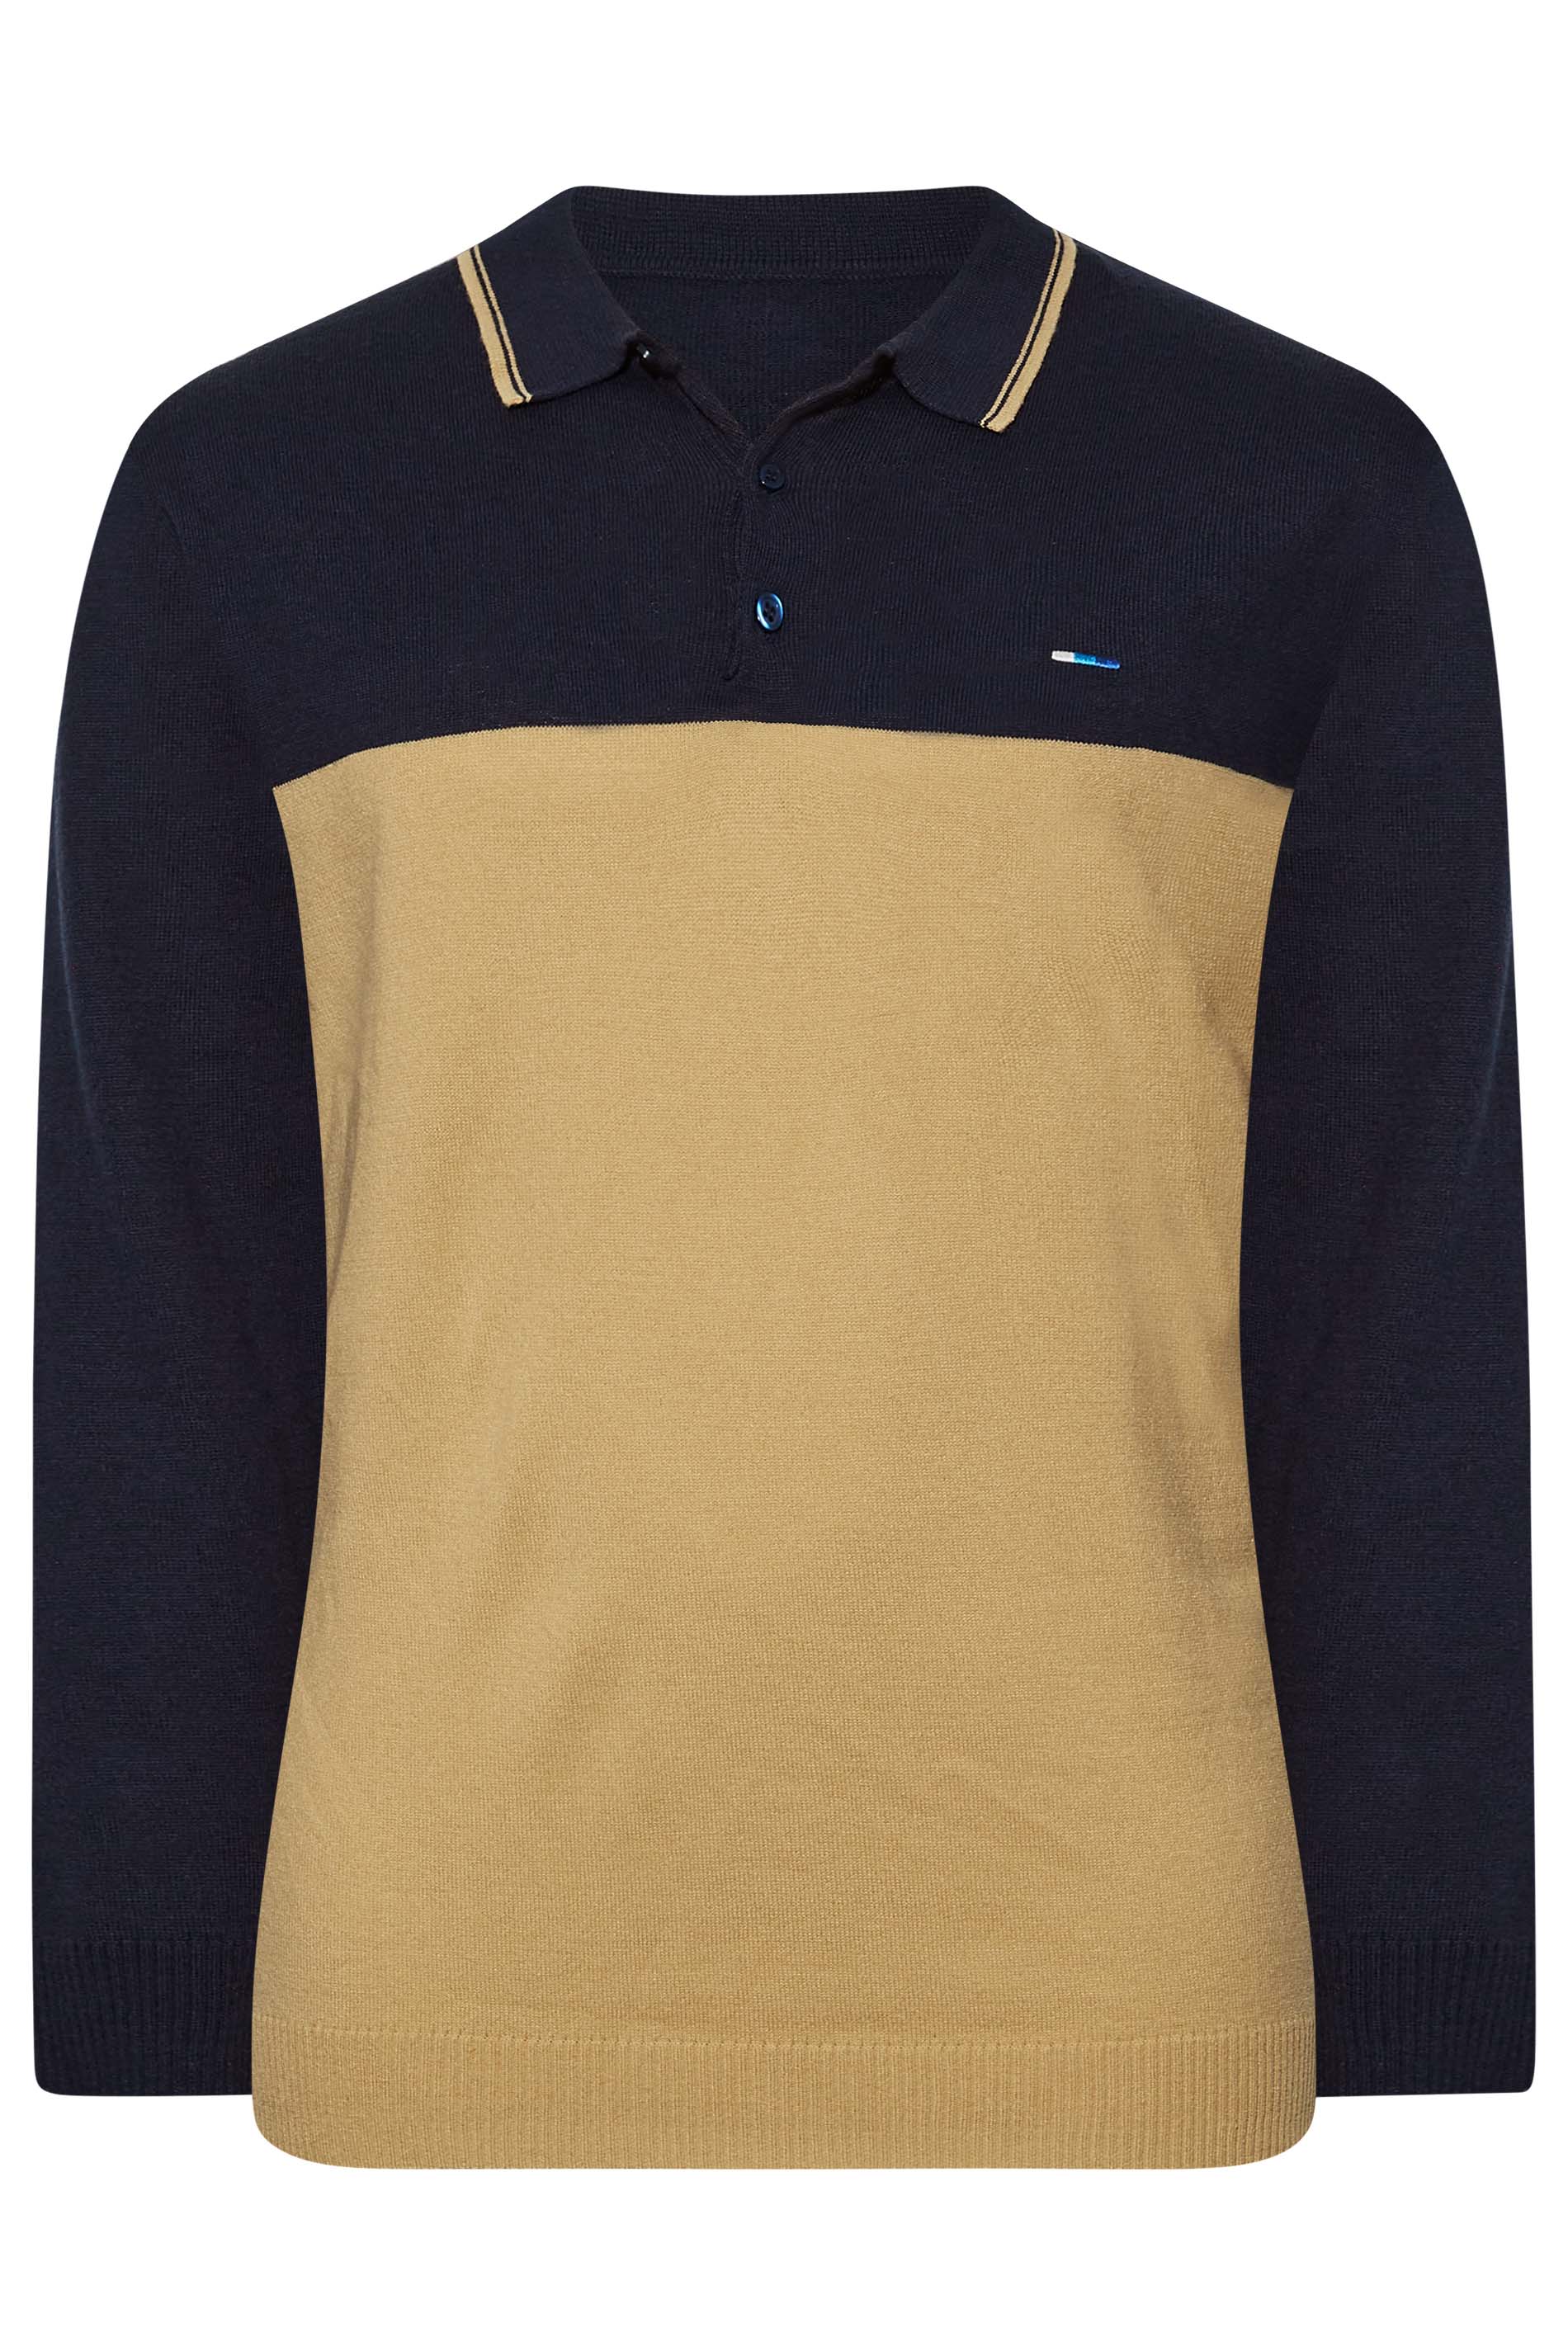 BadRhino Big & Tall Navy Blue Colour Block Long Sleeve Knitted Polo Shirt 1